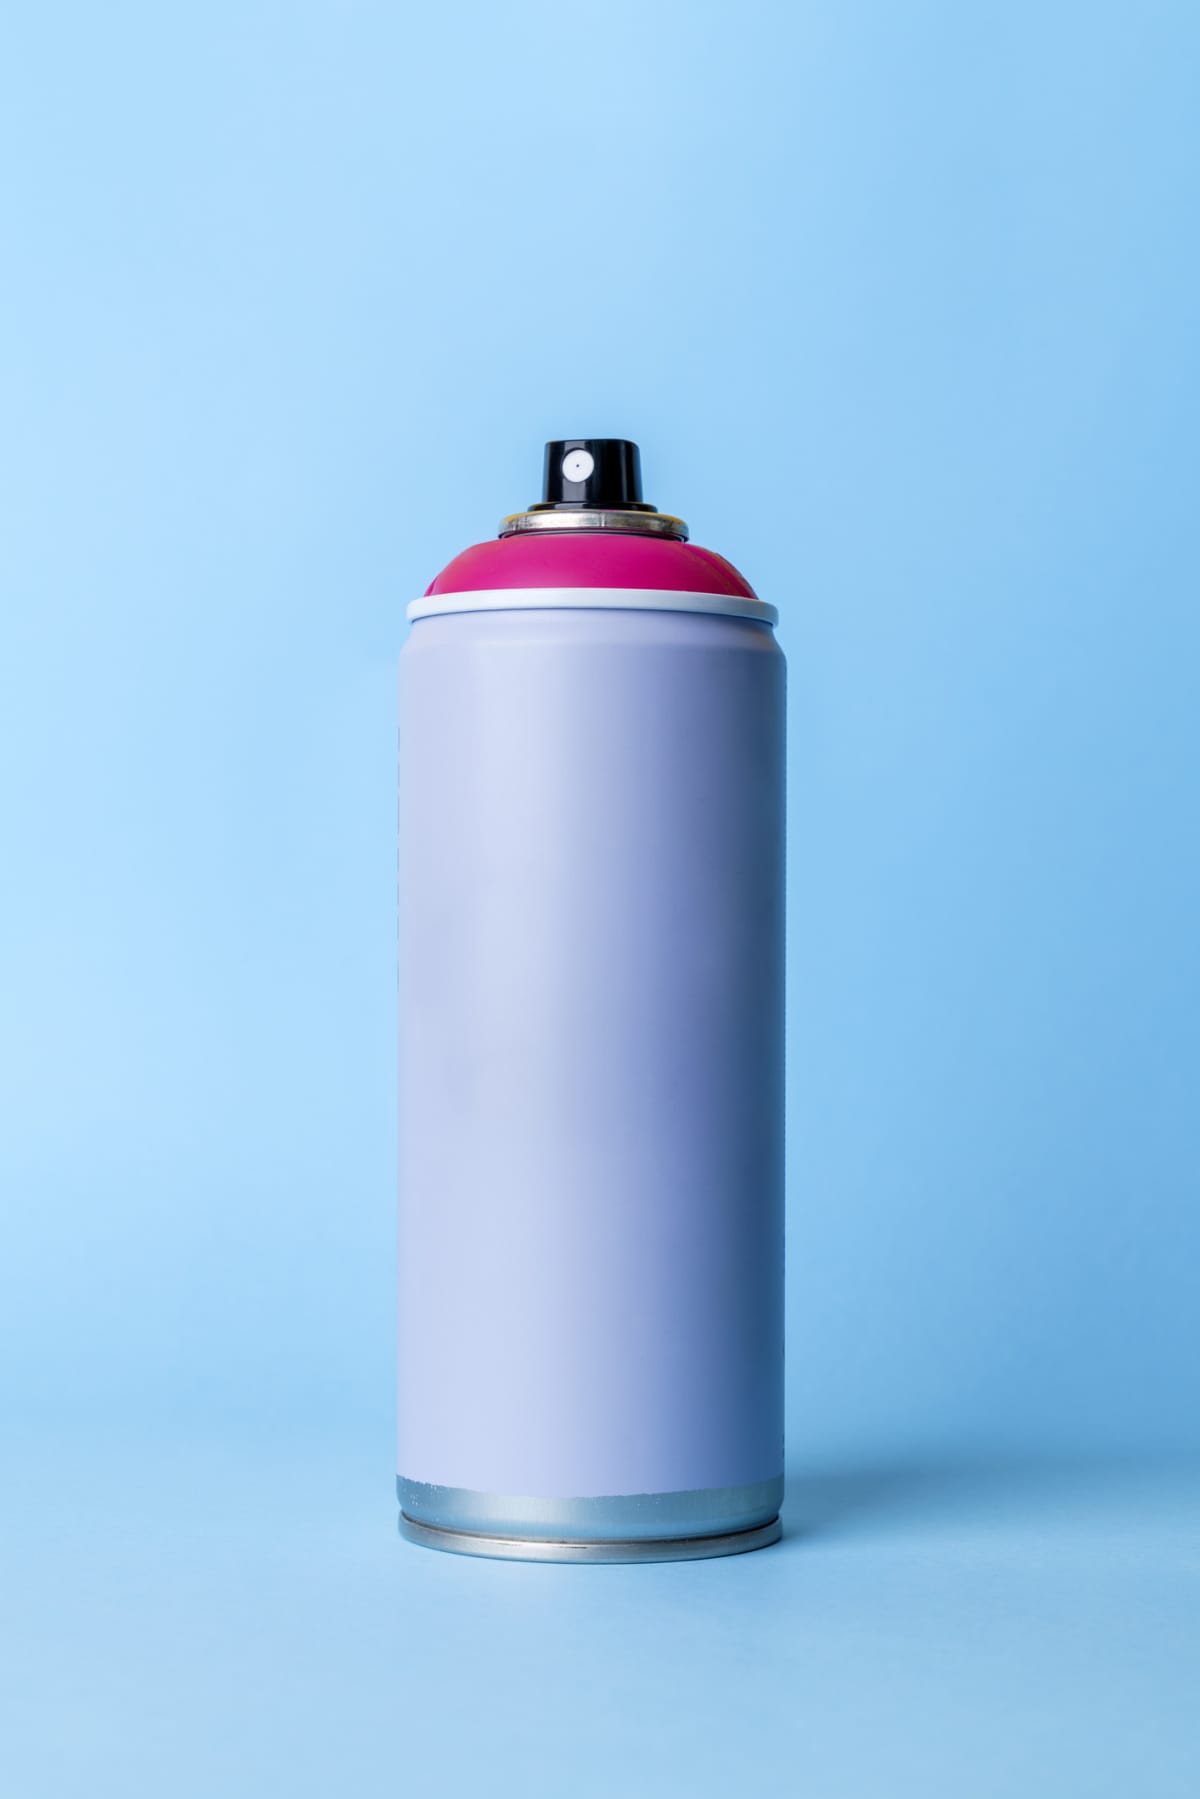 An aerosol can of hairspray